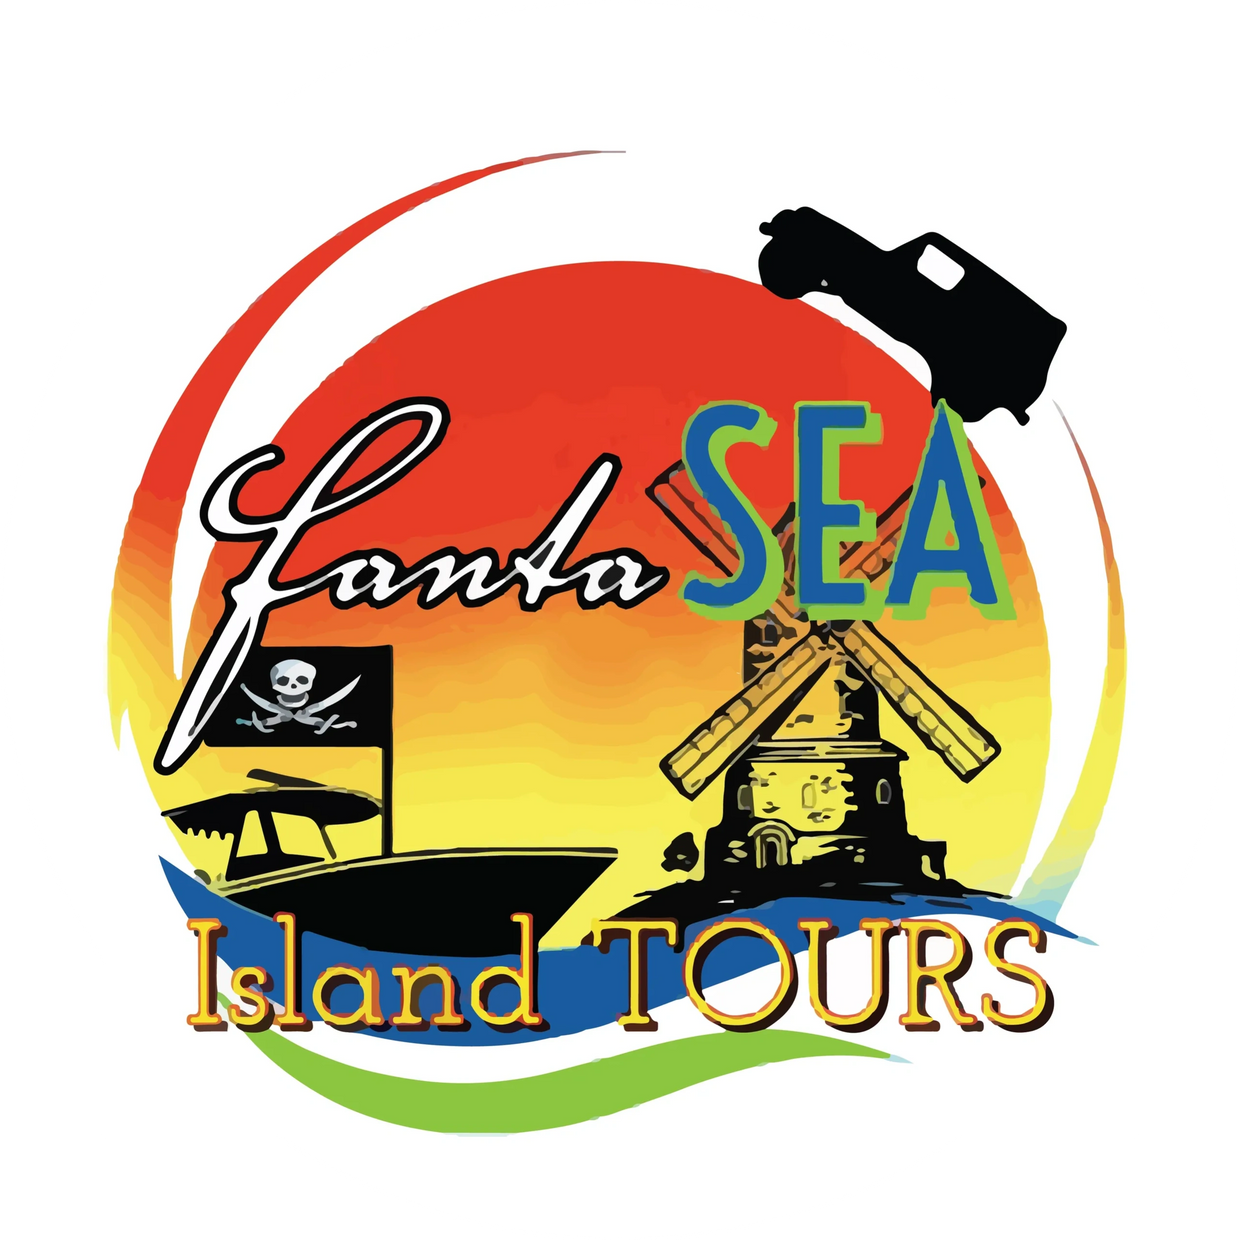 FantaSEA Island Tours LOGO, your gateway to the treasures of the U.S. Virgin Islands.